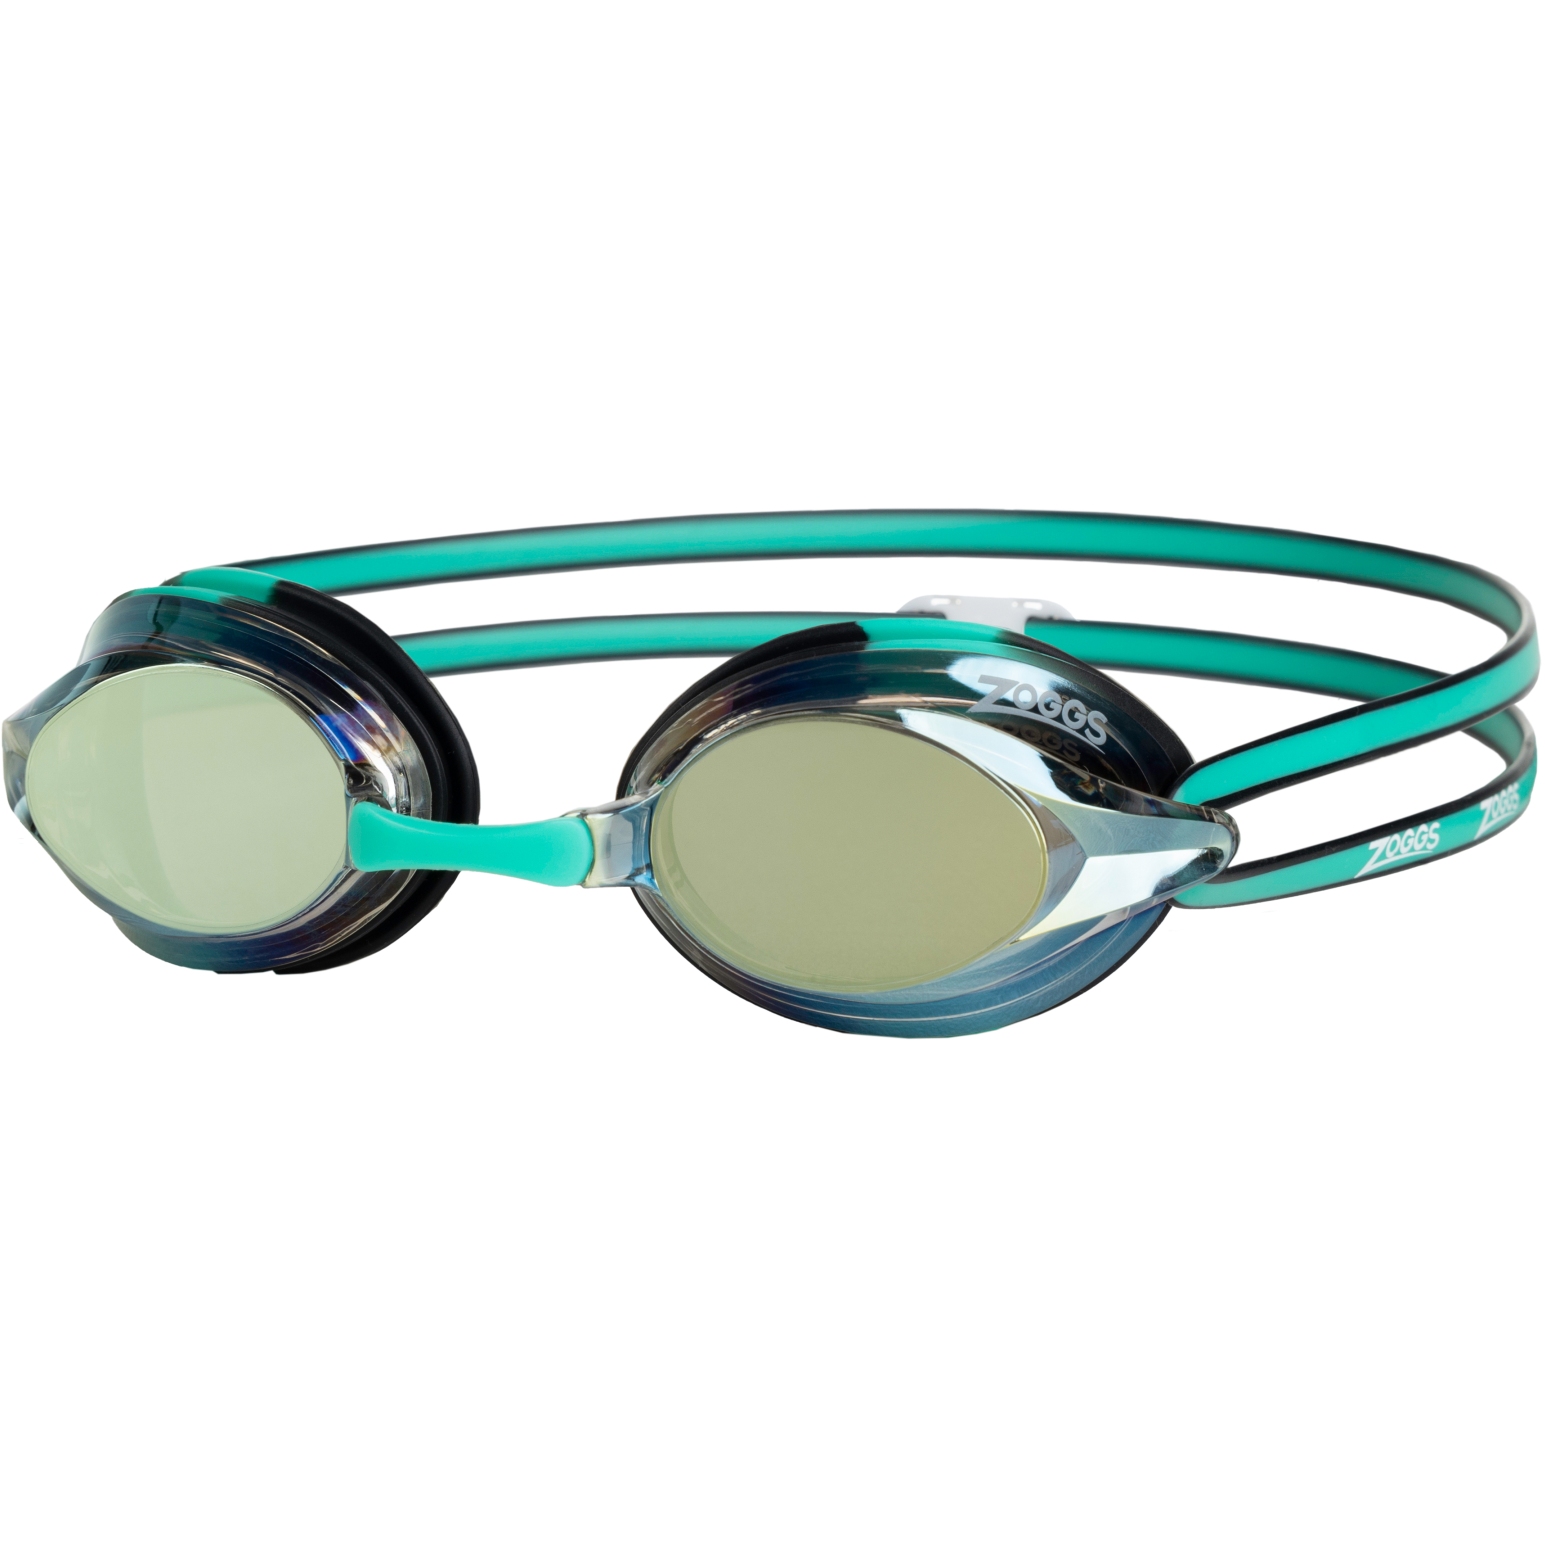 Picture of Zoggs Racer Titanium Swimming Goggles - Mirror Gold Lenses - Green/Black